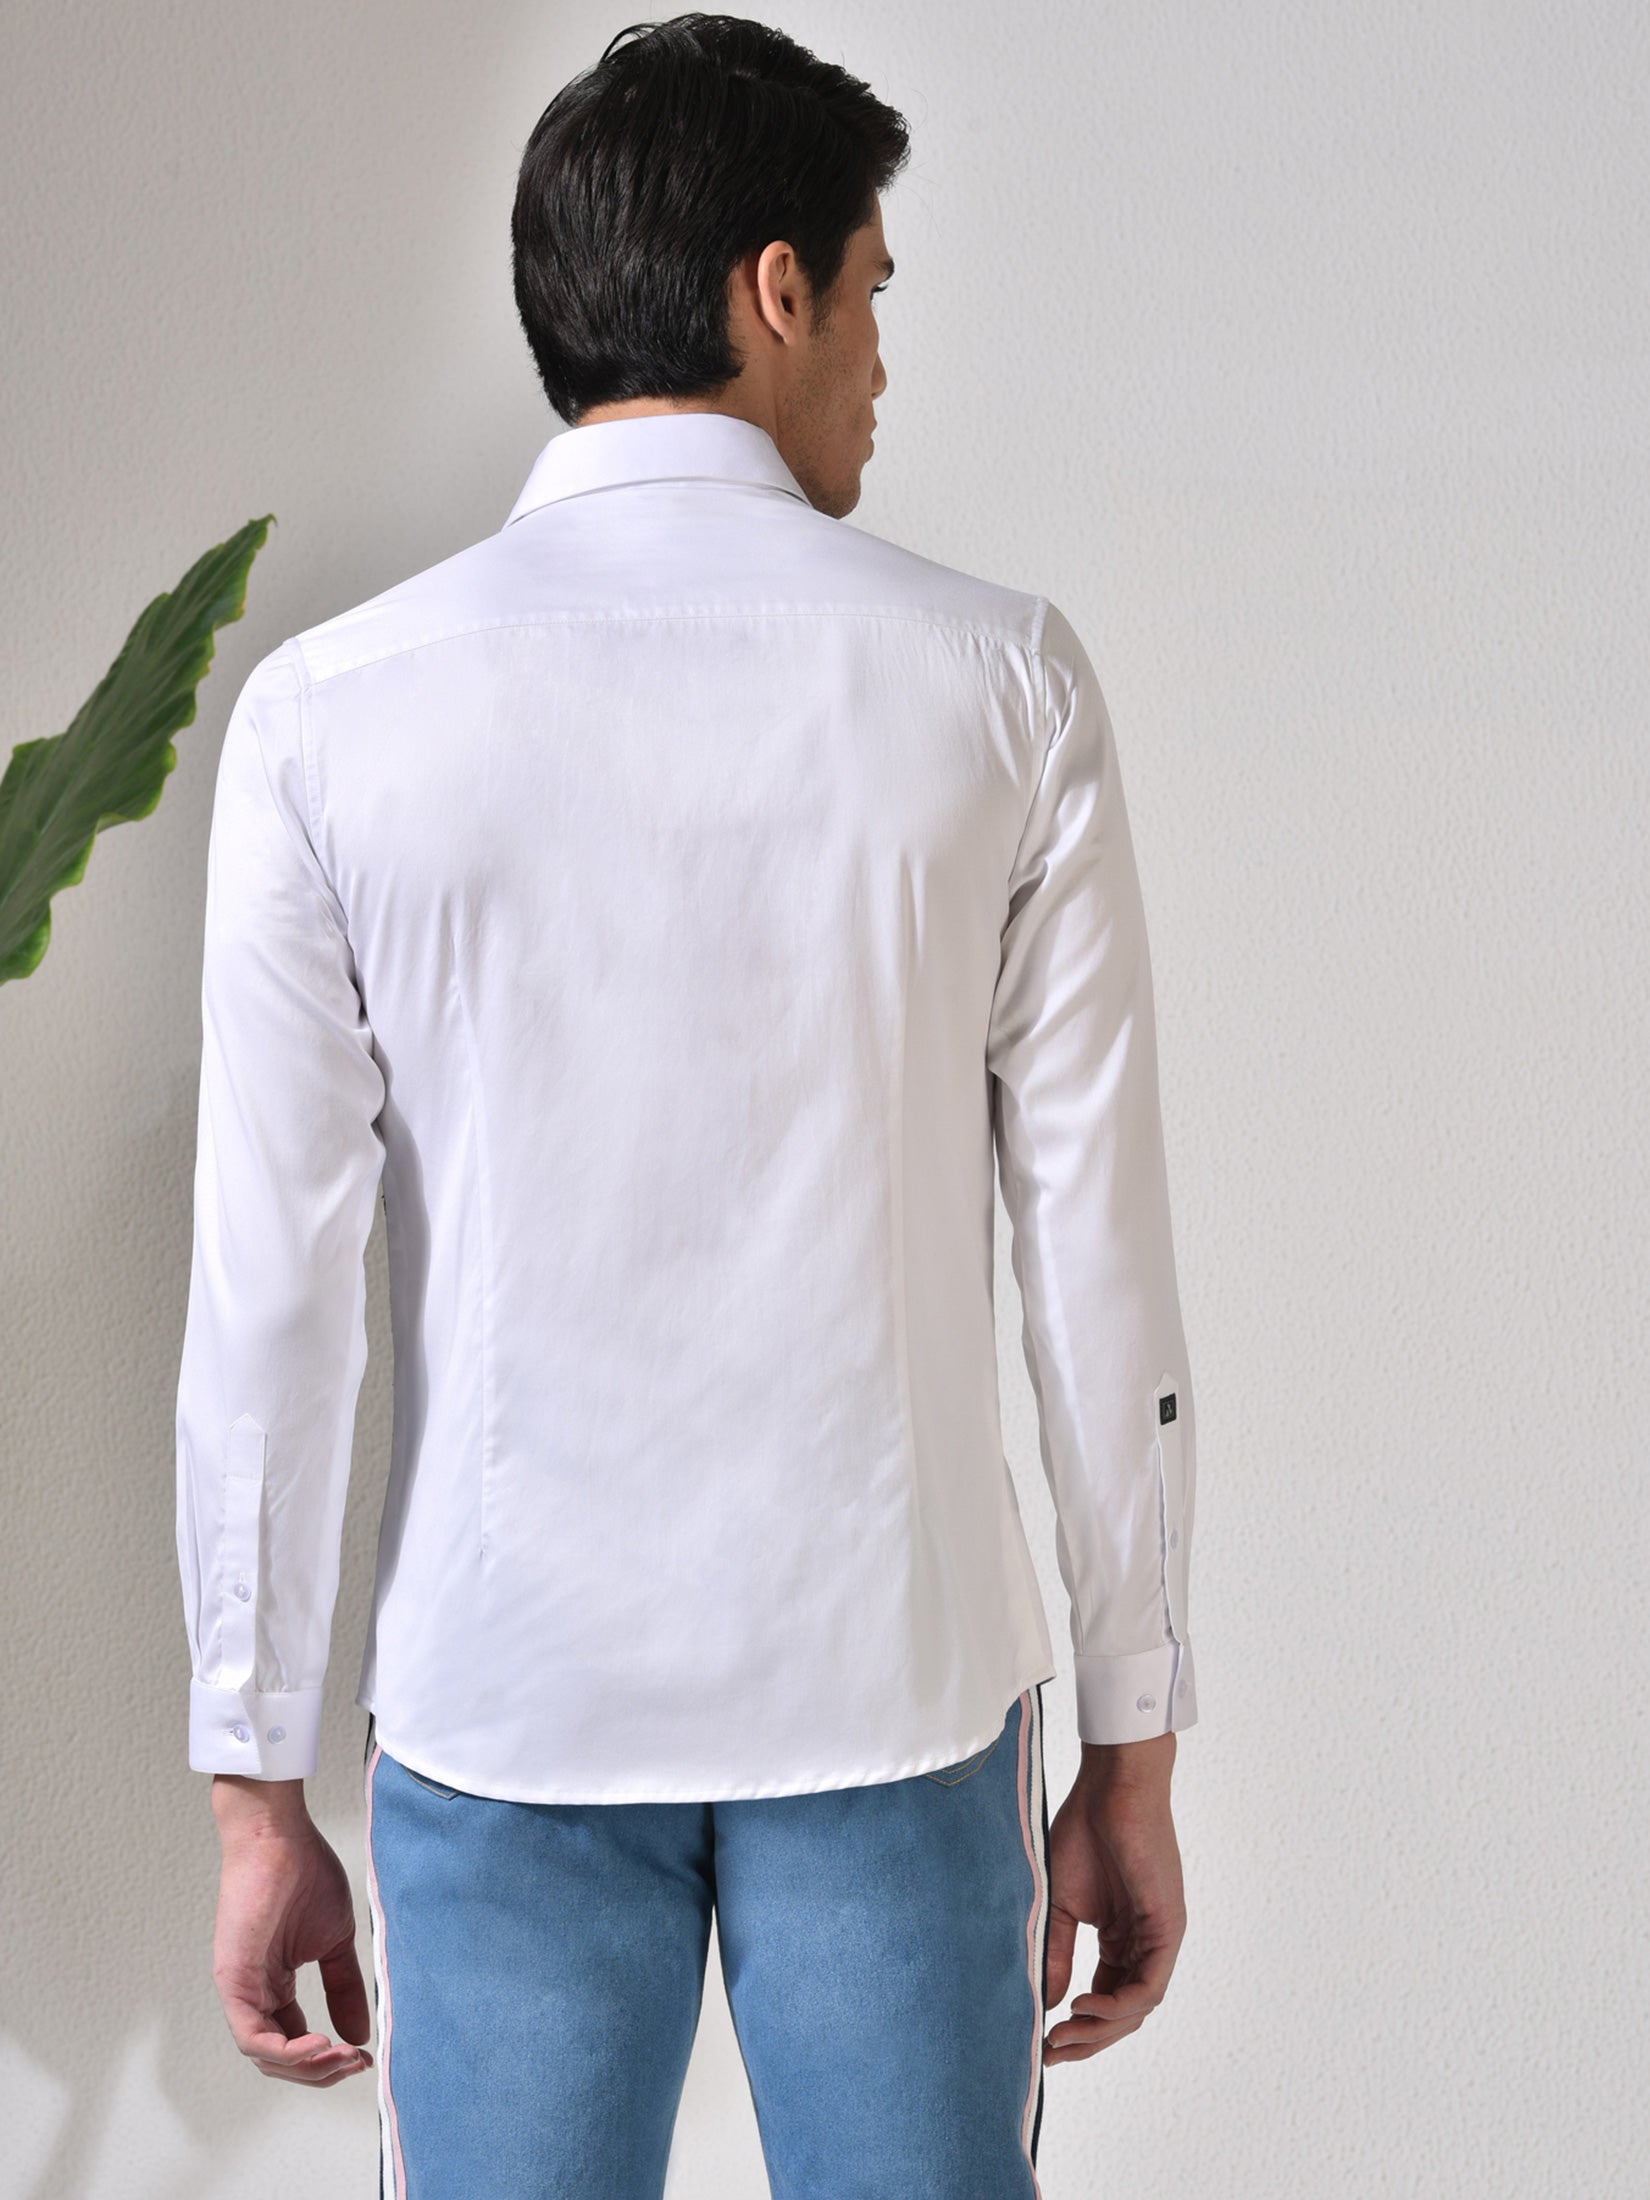 Luminor, White Colour Blocked Stripes Shirt